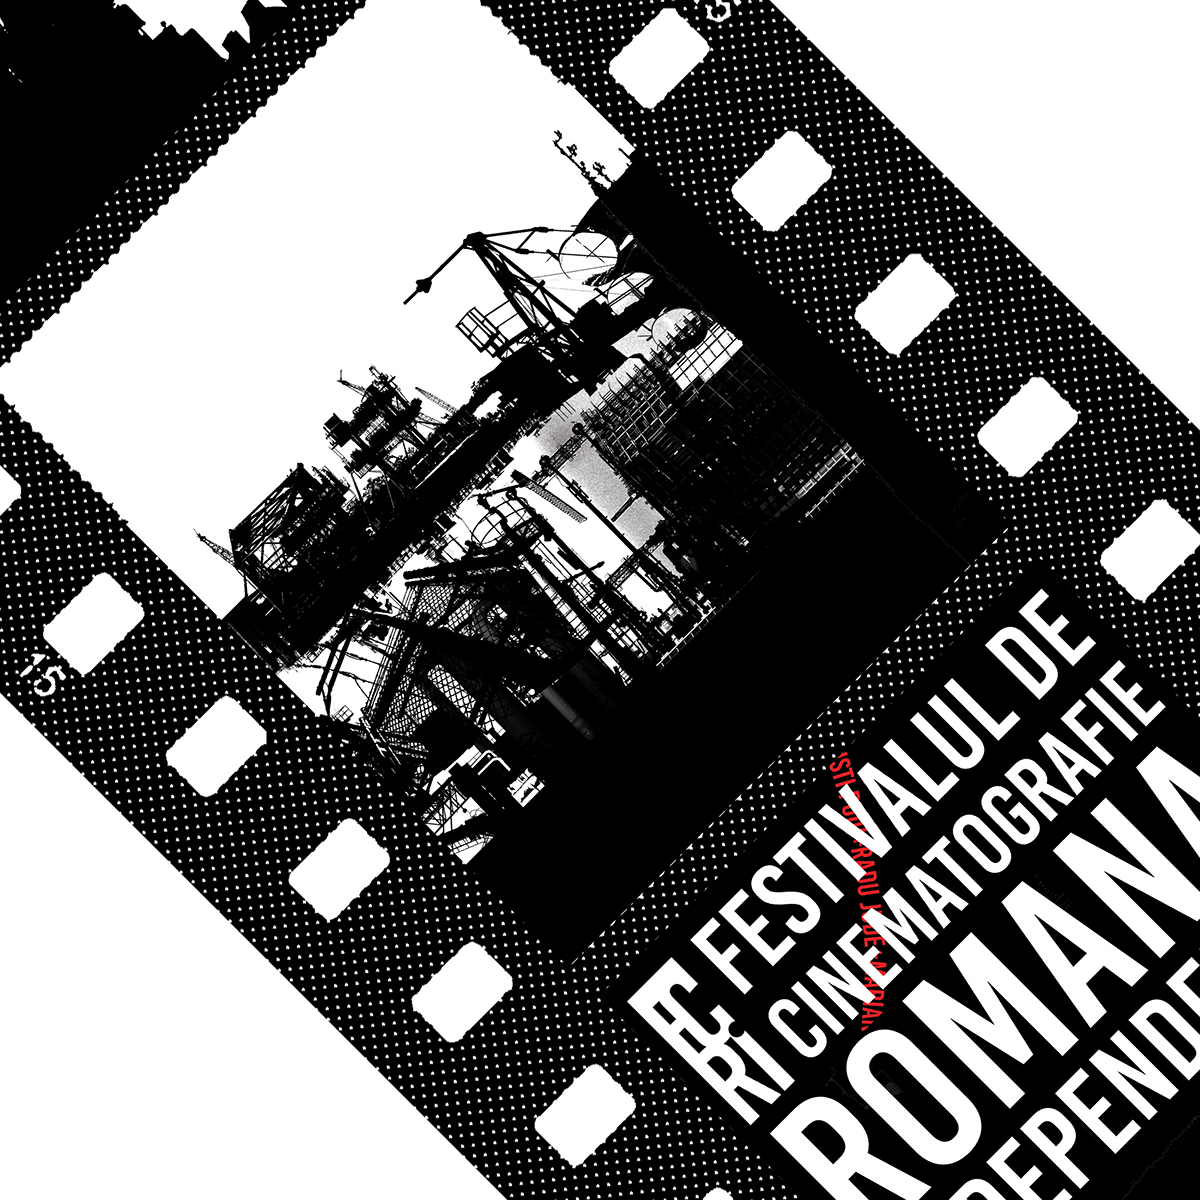 Cinema festival cultural poster communism